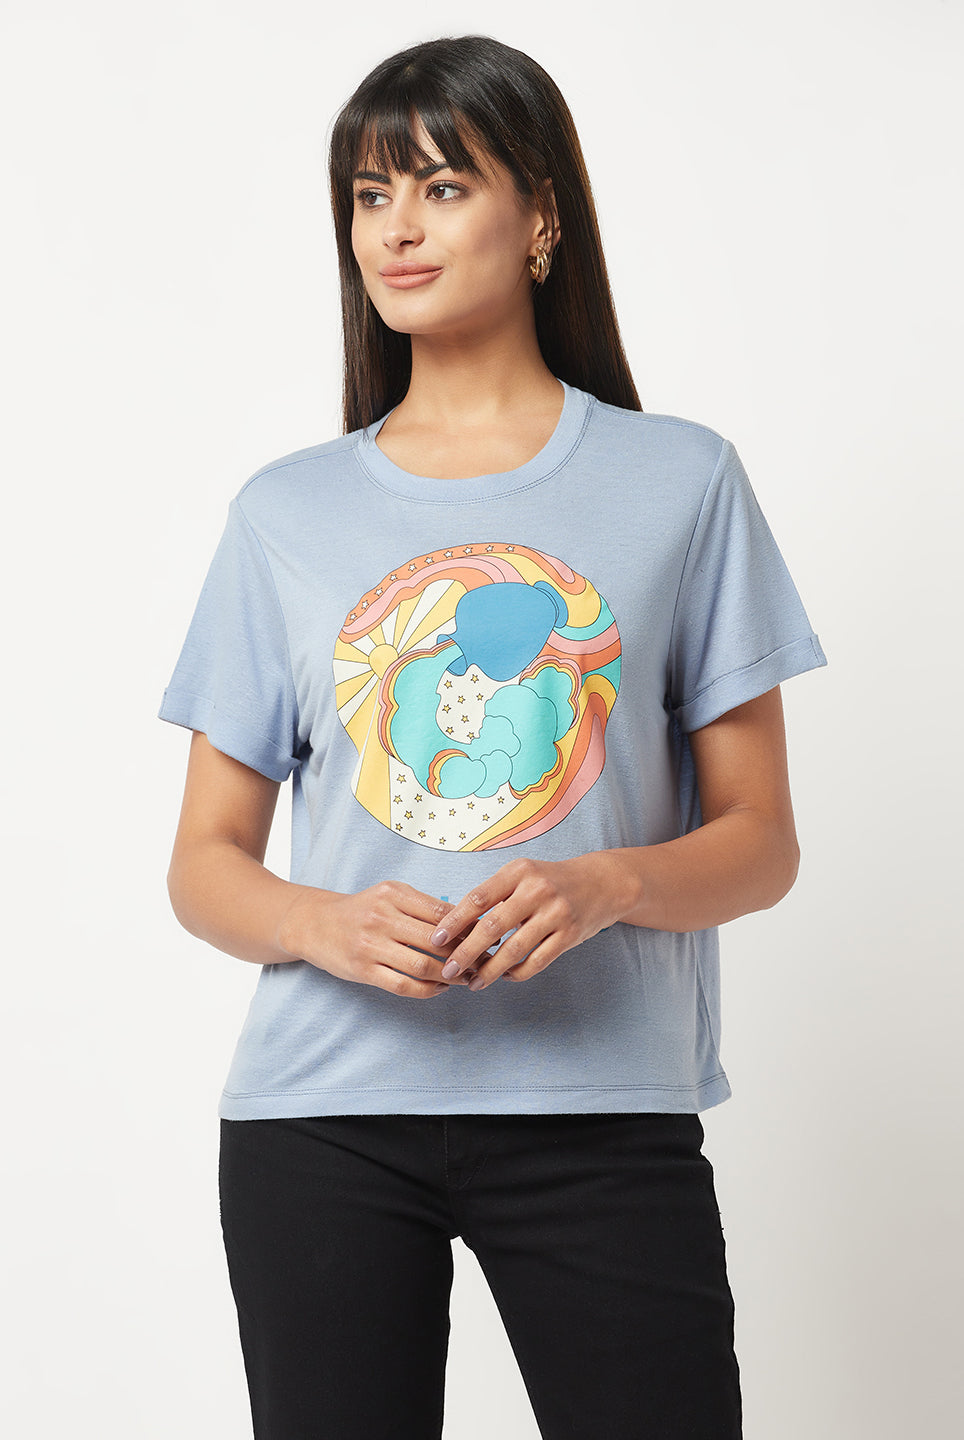 Aquarius Zodiac Sign T-shirt